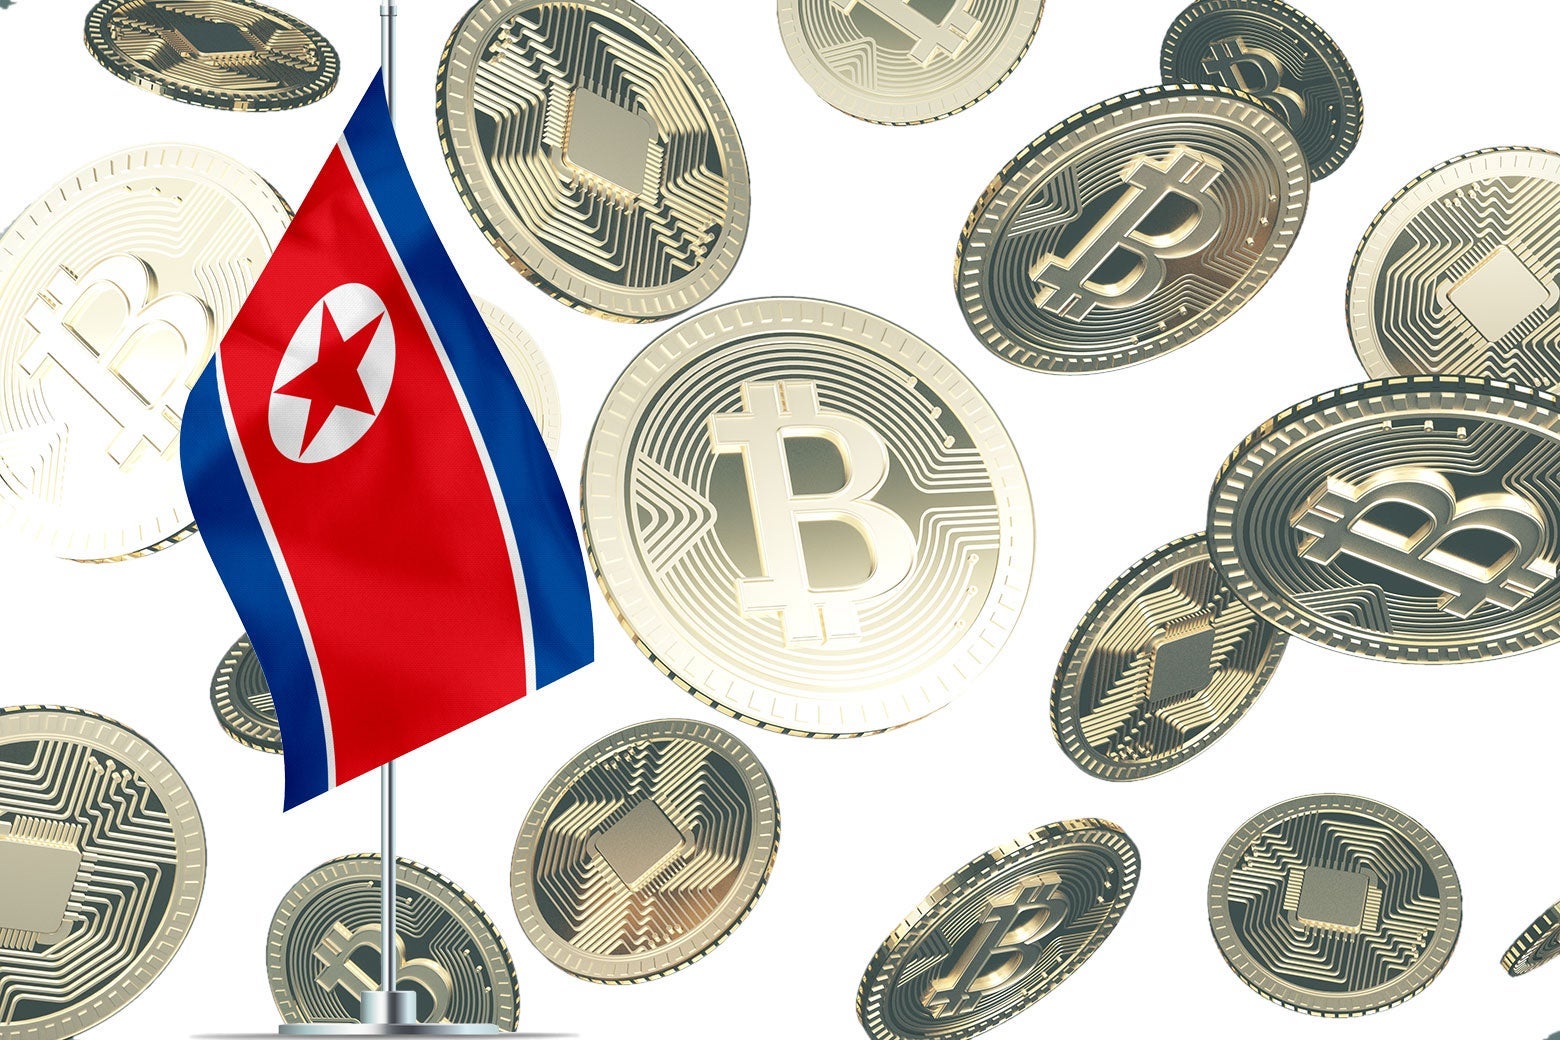 Coins with the Bitcoin logo surround a North Korean flag.